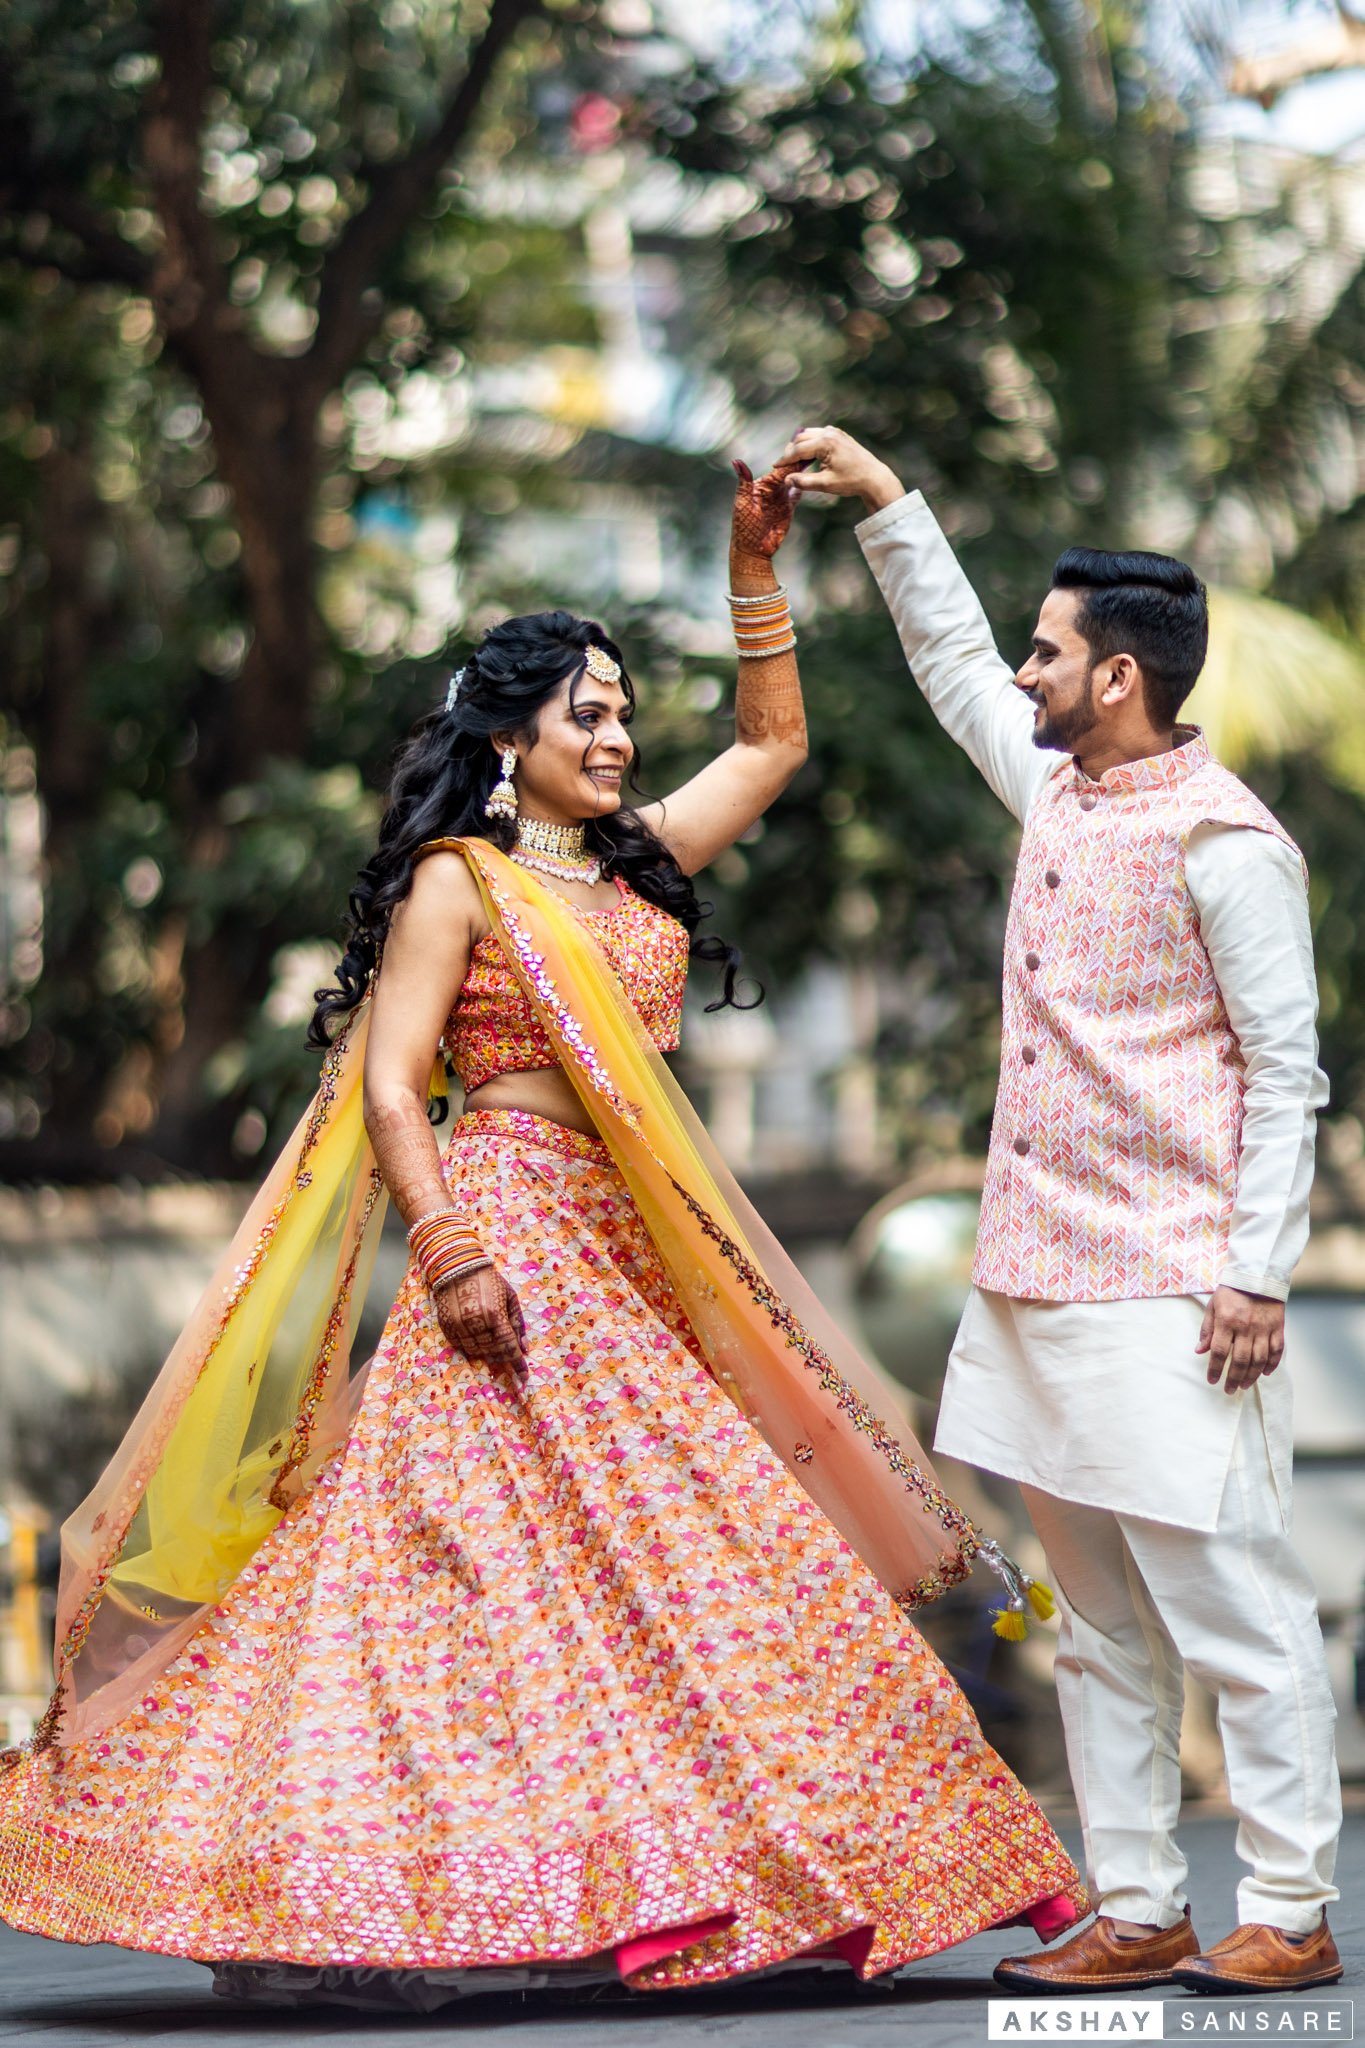 Lipika x Bhavya Compress Akshay Sansare Photography & Films Best wedding photographers in mumbai india-10.jpg